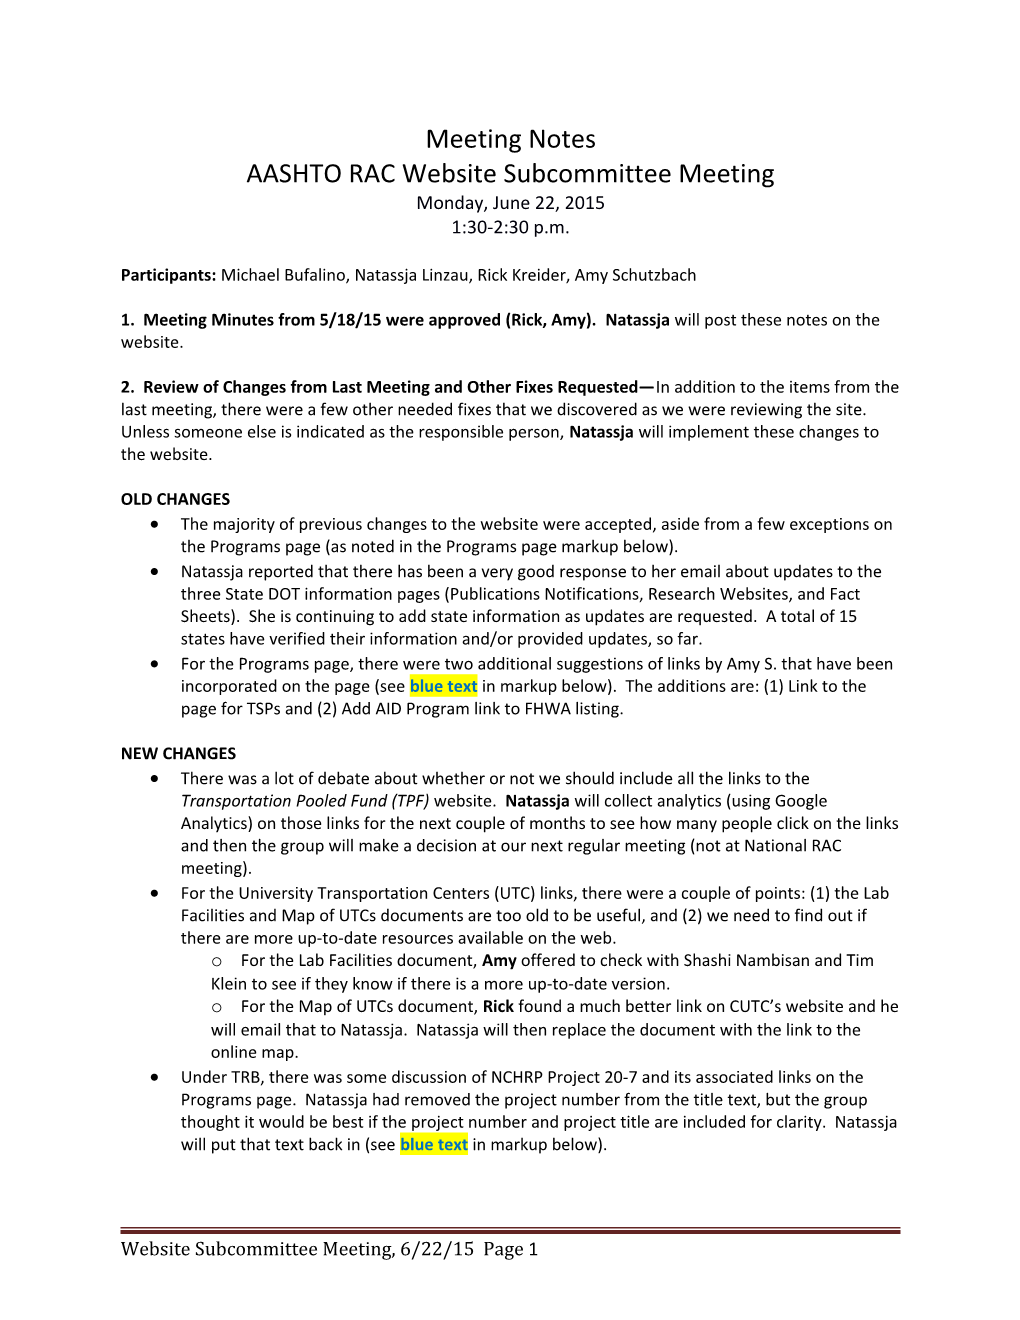 Website Subcommittee Meeting Notes: June 22, 2015